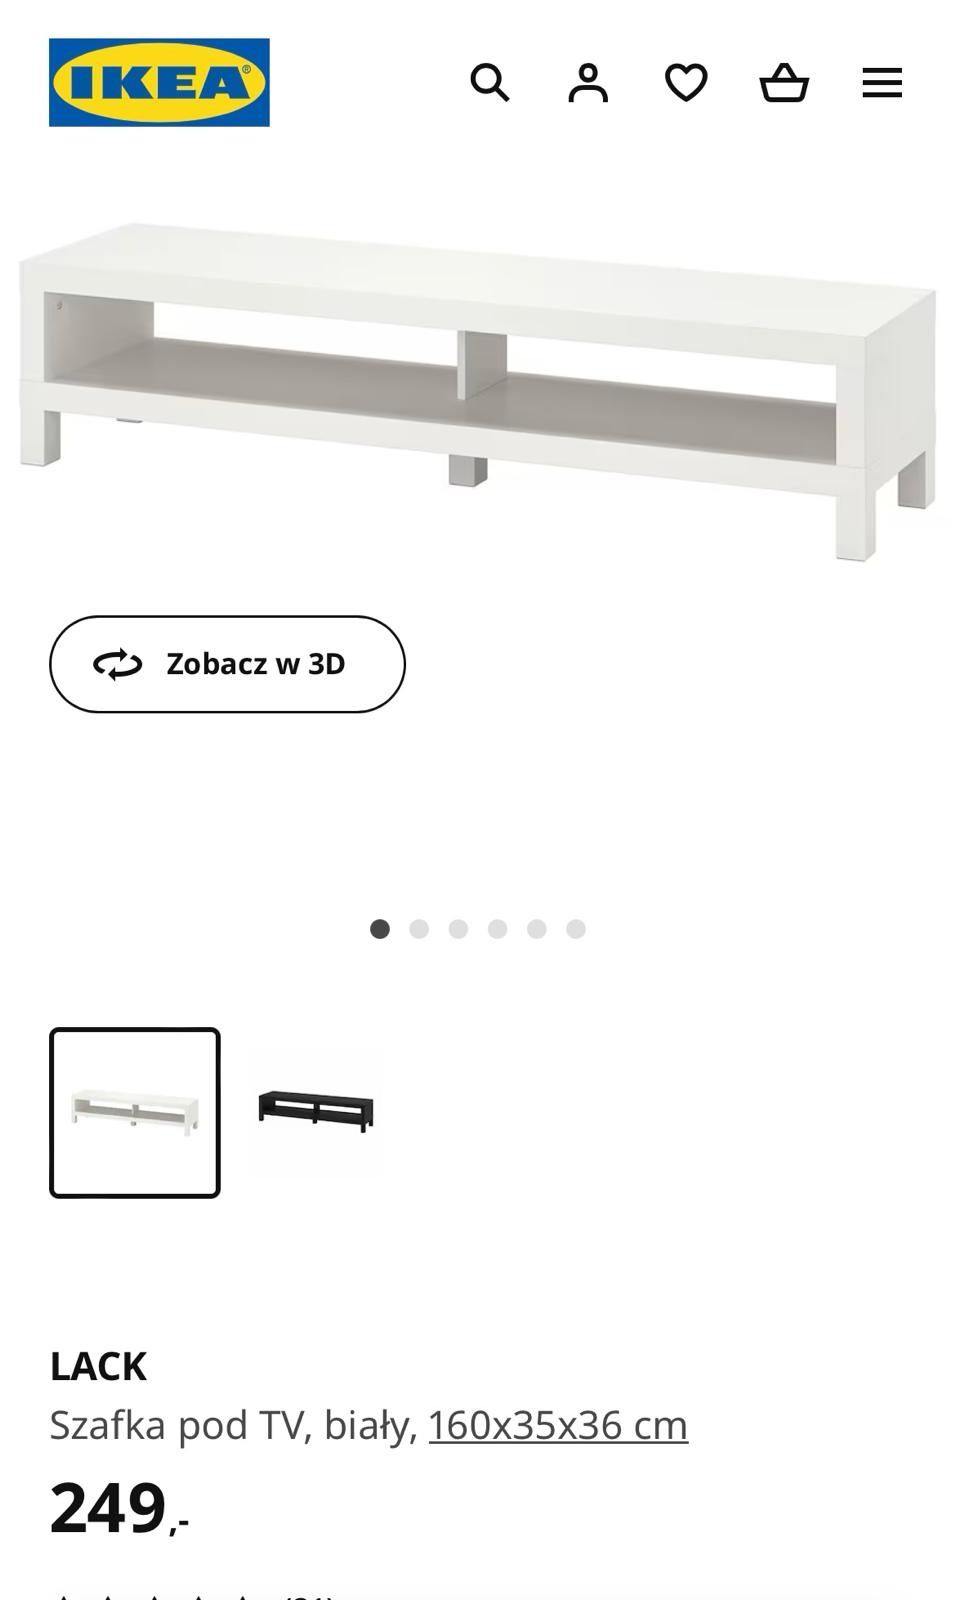 Szafka biała pod TV Ikea